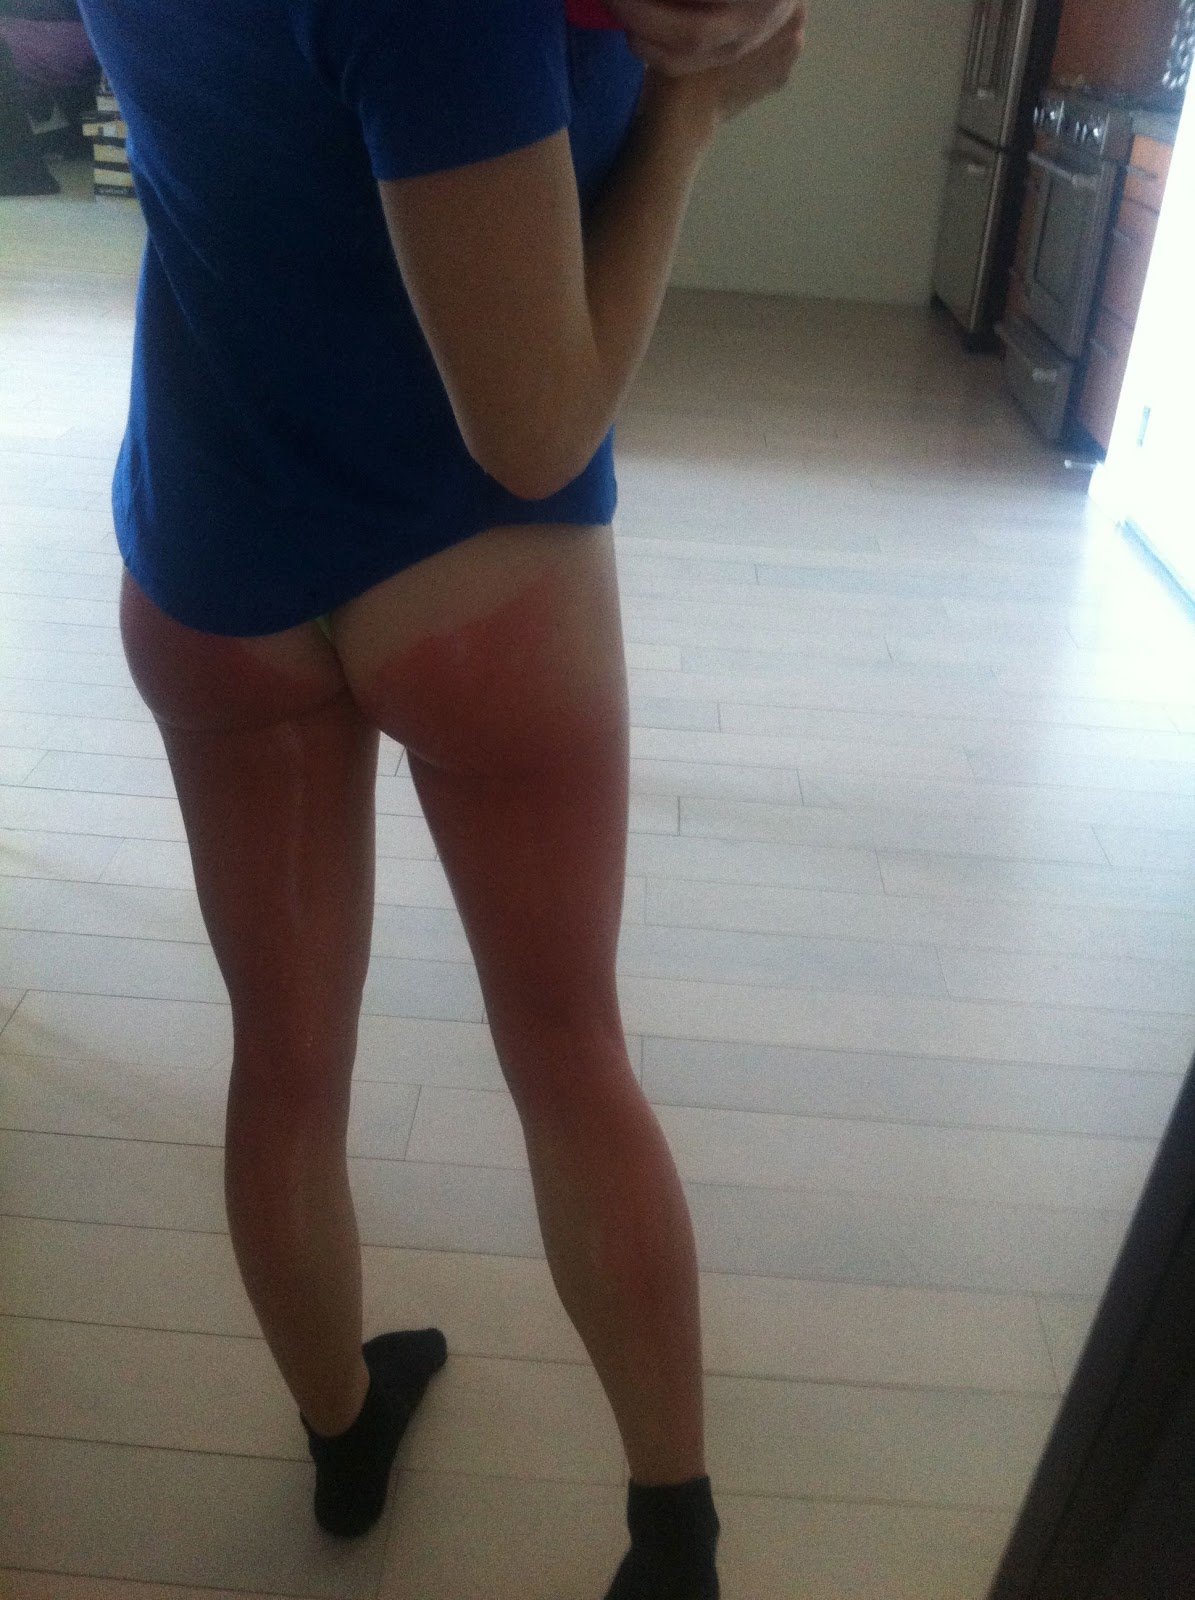 Jillian Murray taking a picture of her sun burn exposing butt